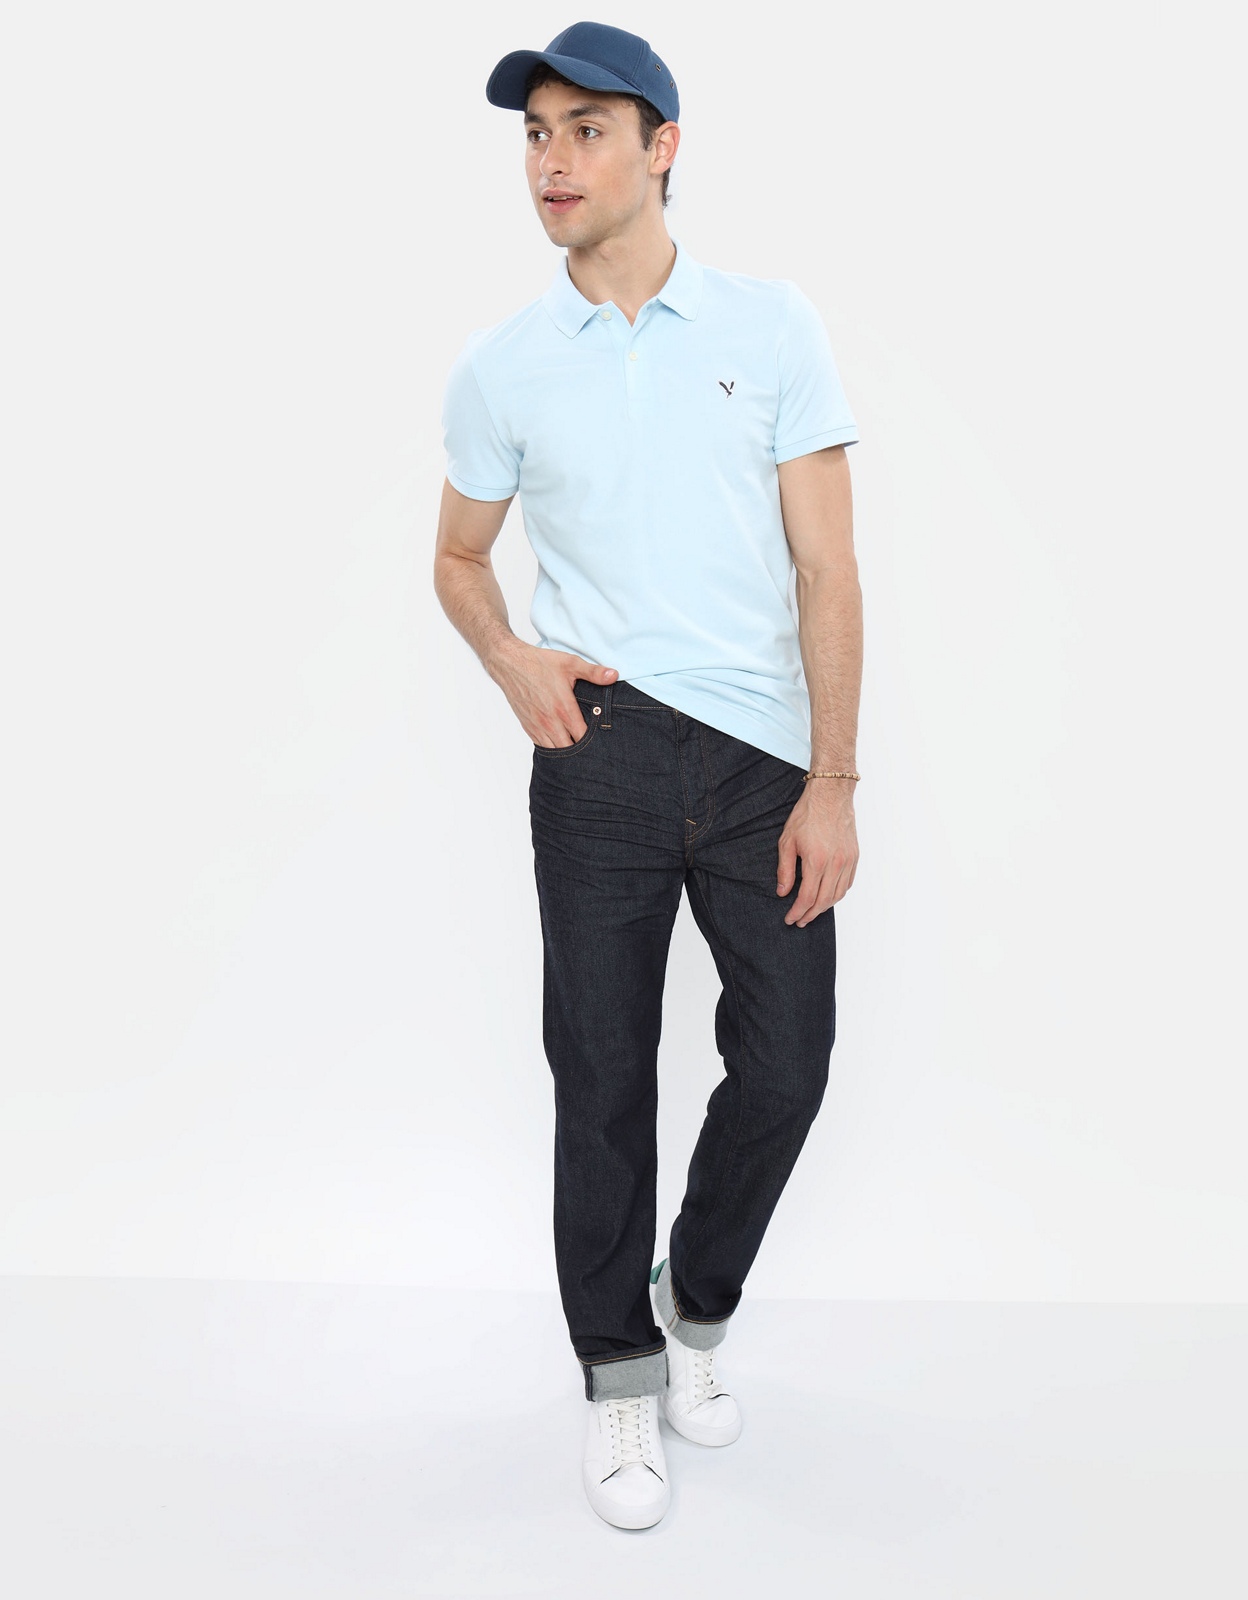 Shop AE Slim Flex Polo Shirt online | American Eagle Outfitters Kuwait